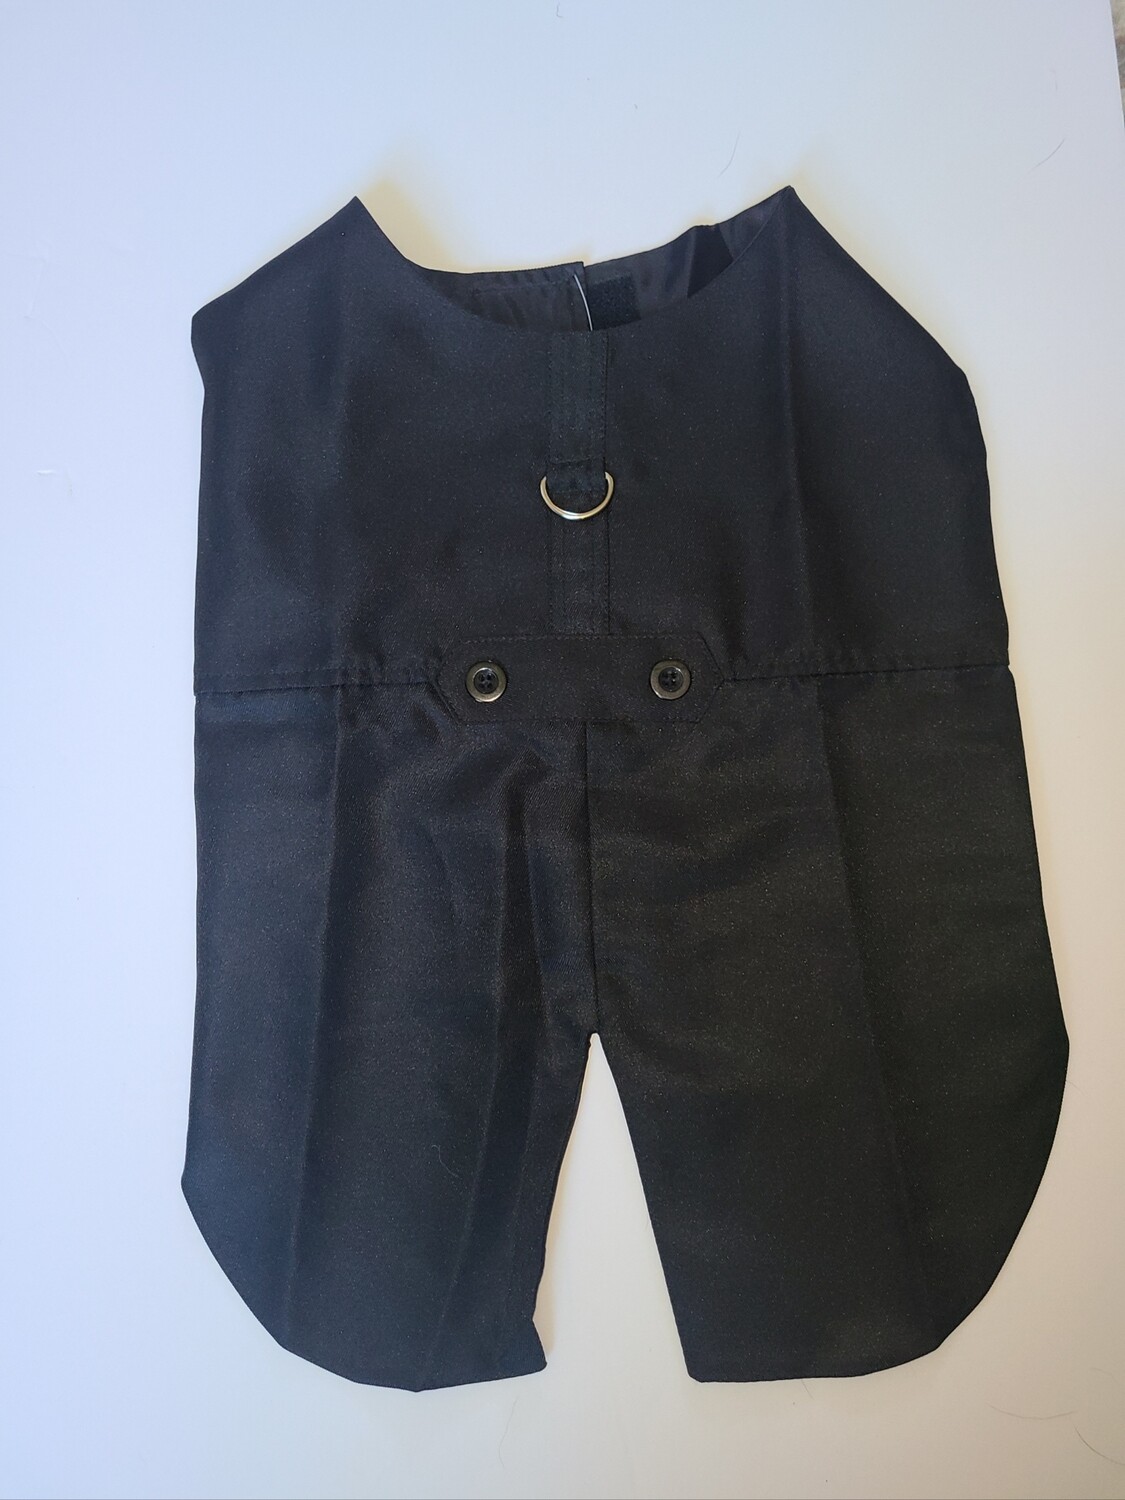 Black - Tuxedo Coat with Tails - M/L